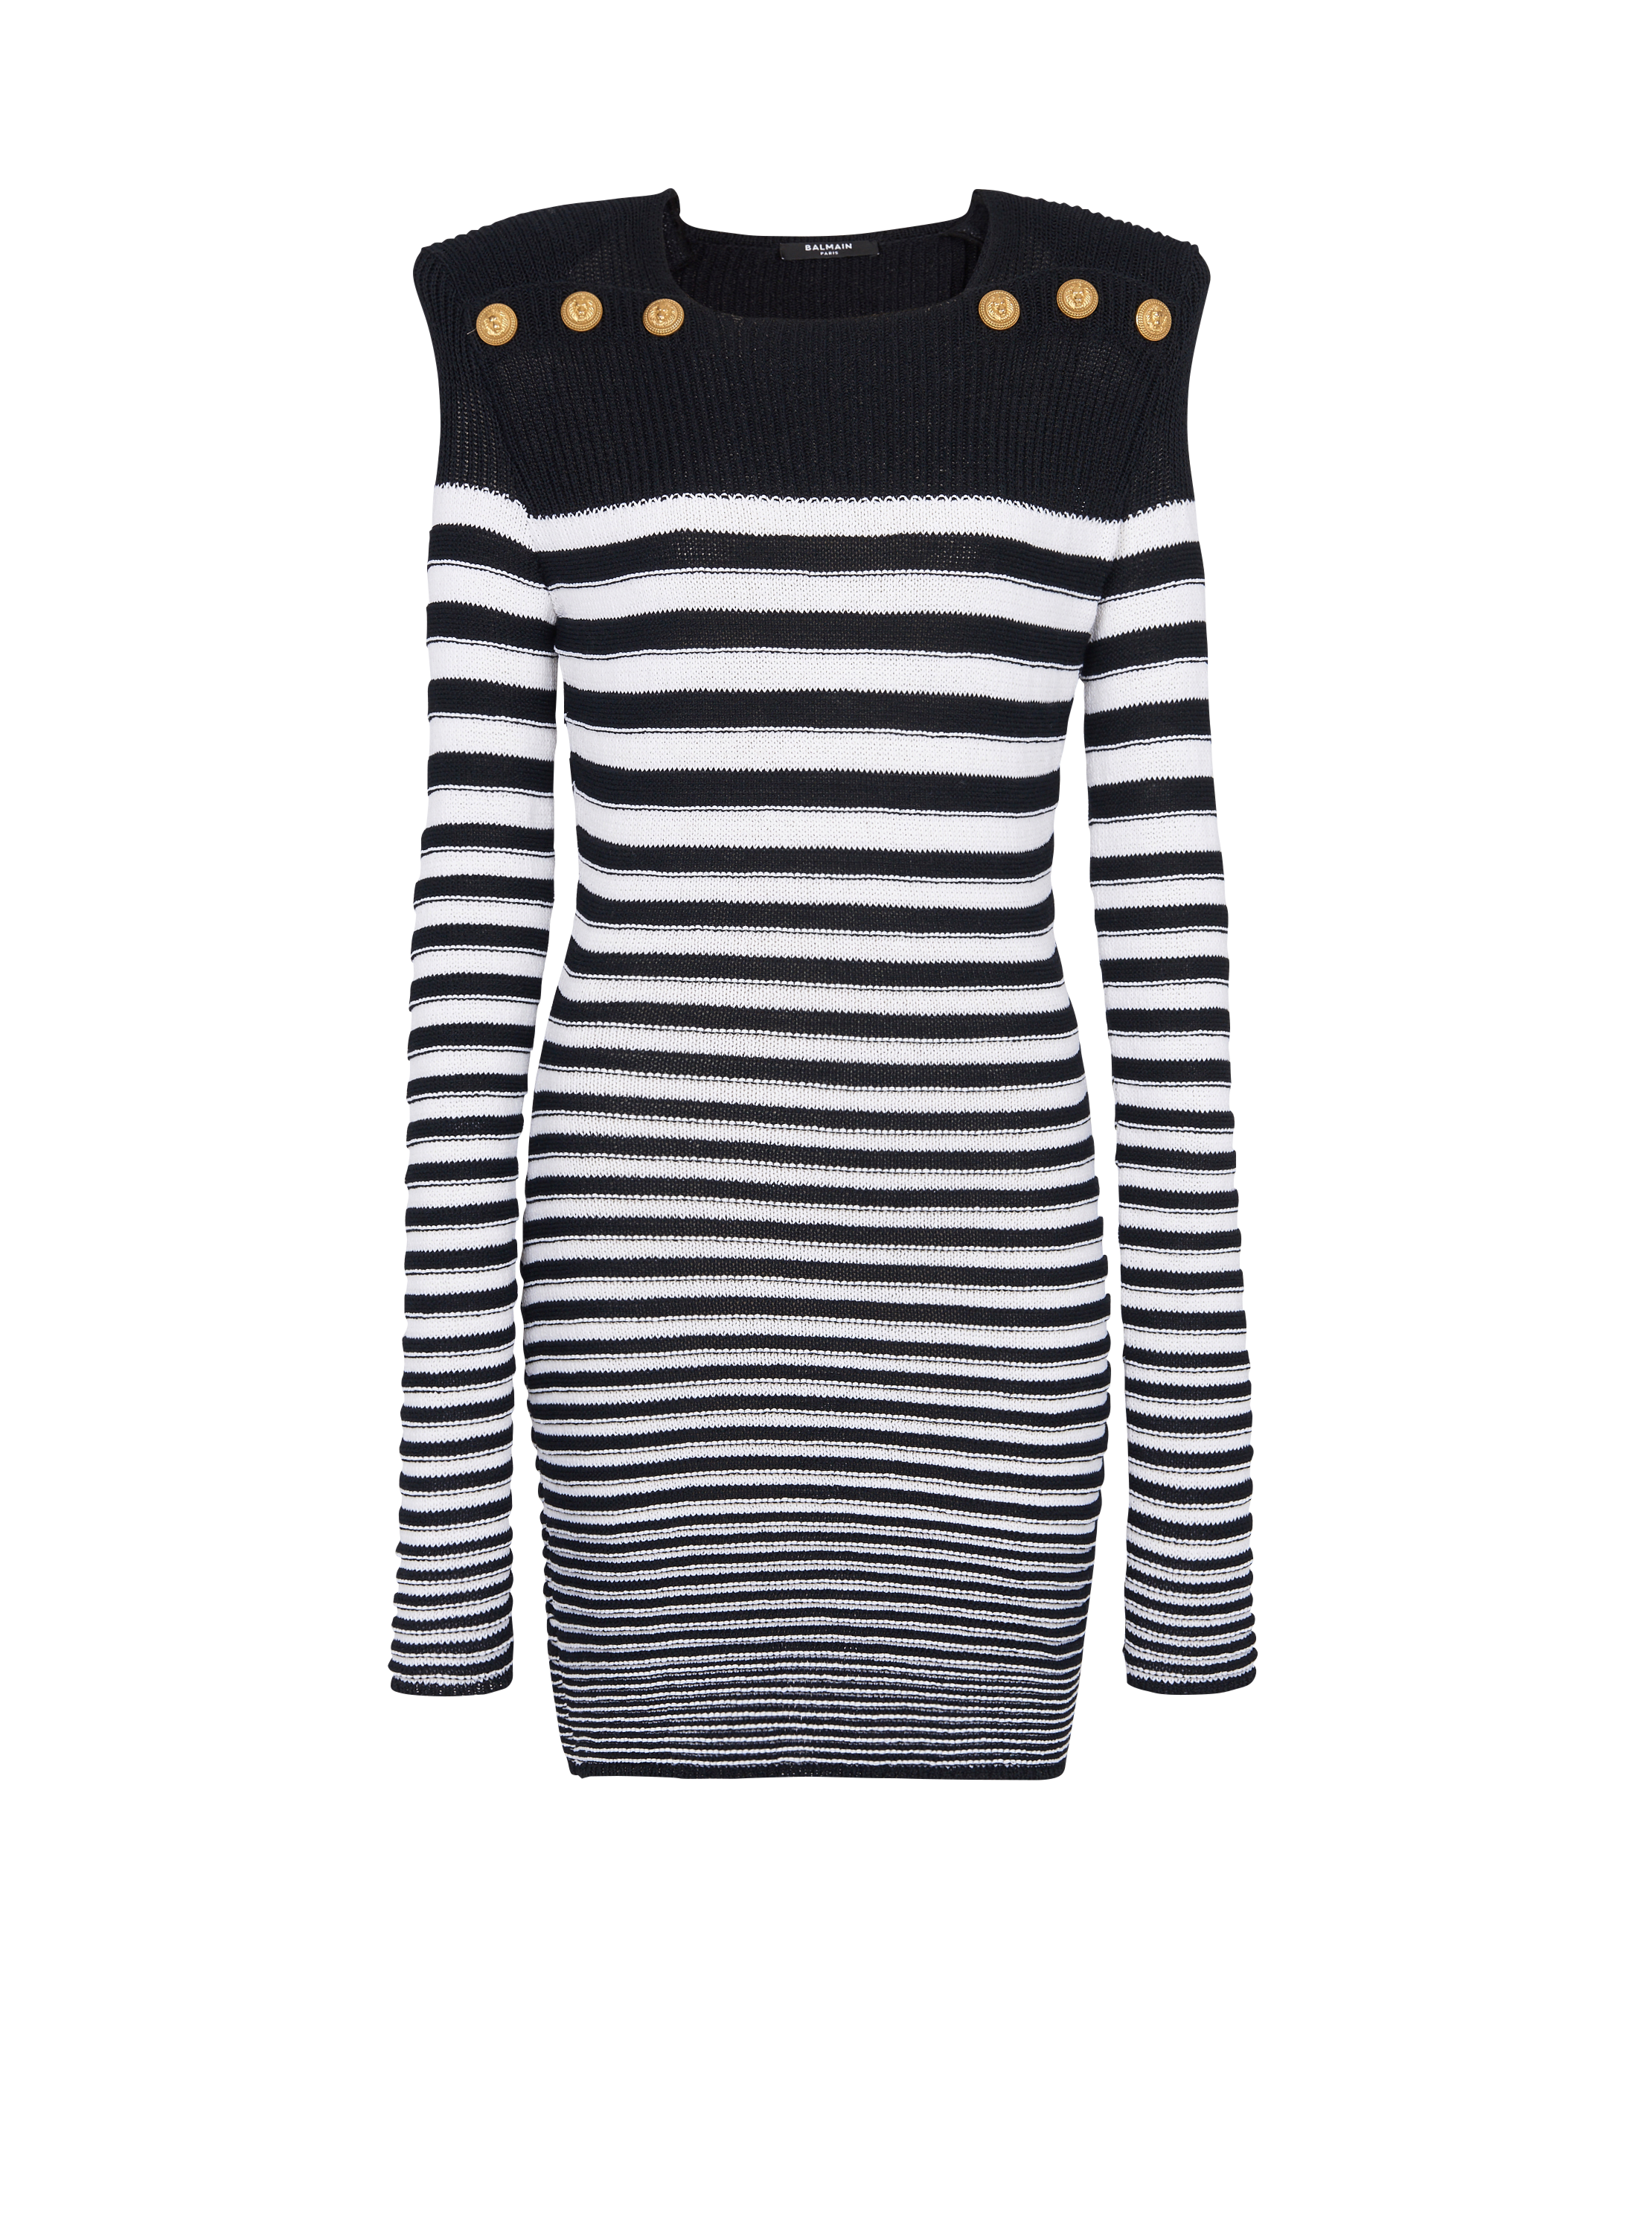 Sailor style knit dress, black, hi-res